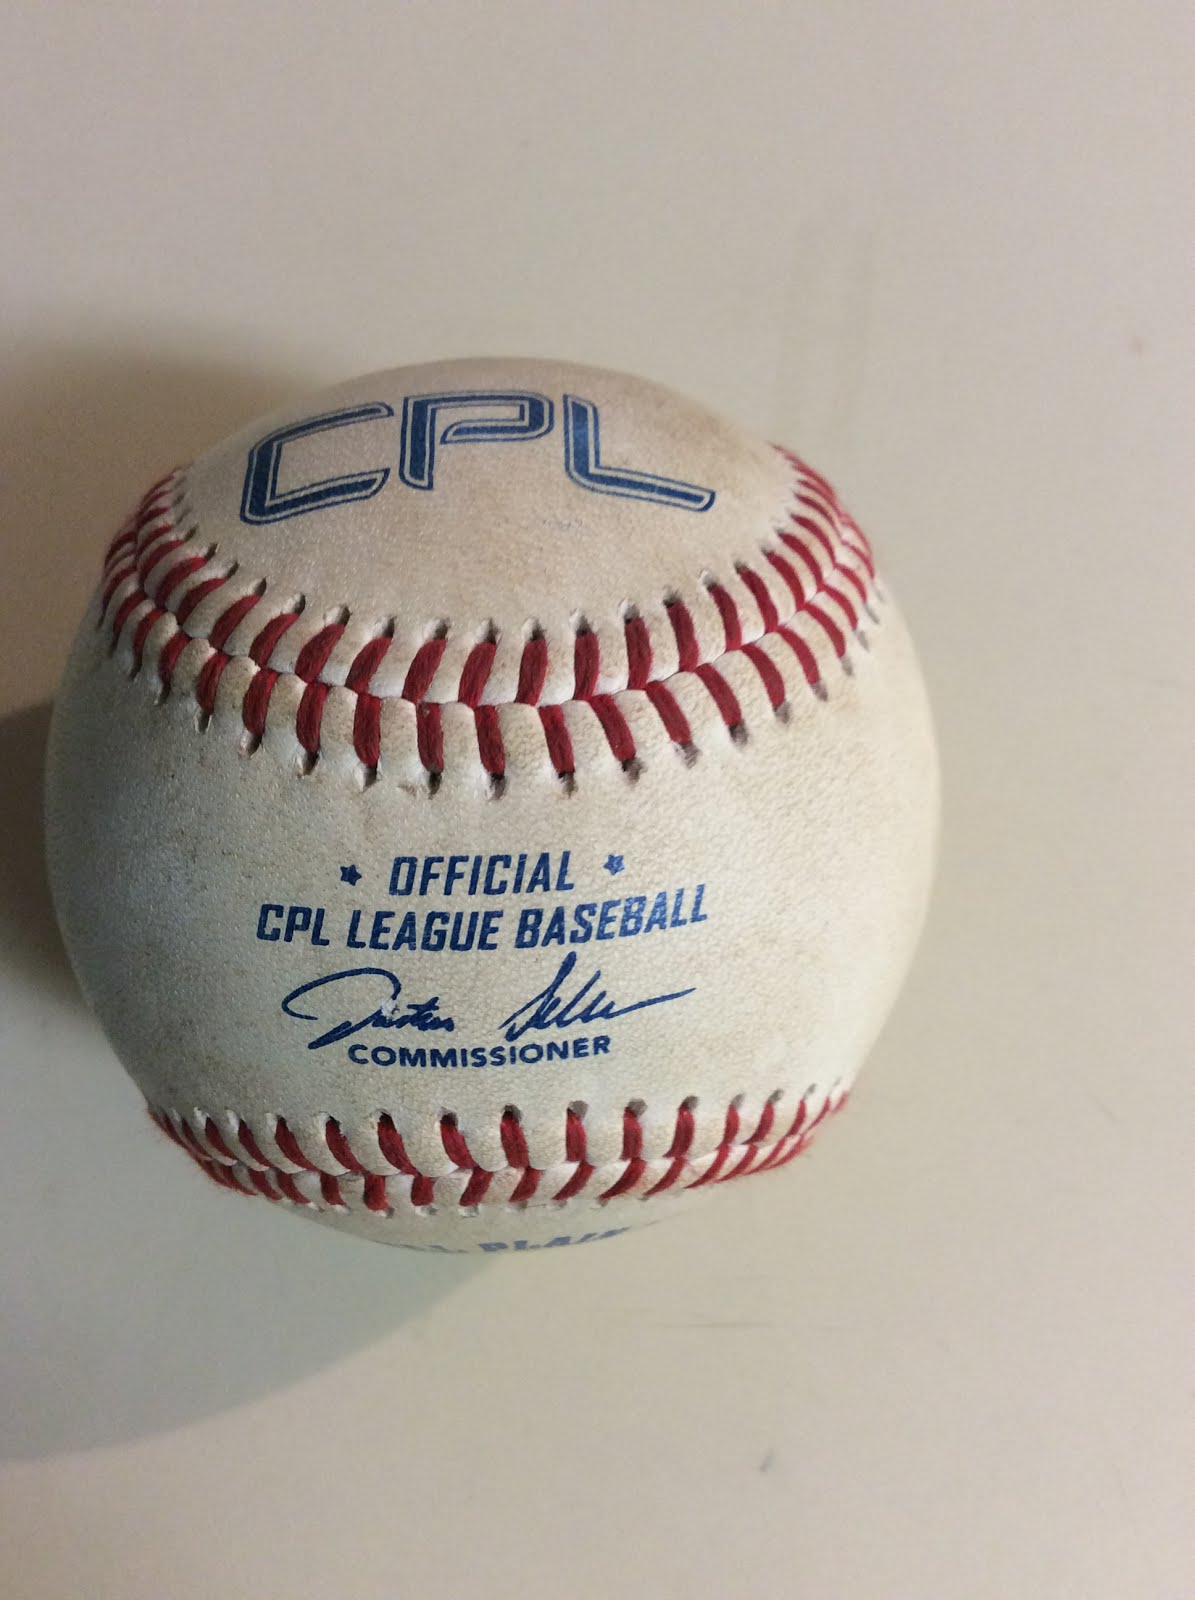 CPL baseball